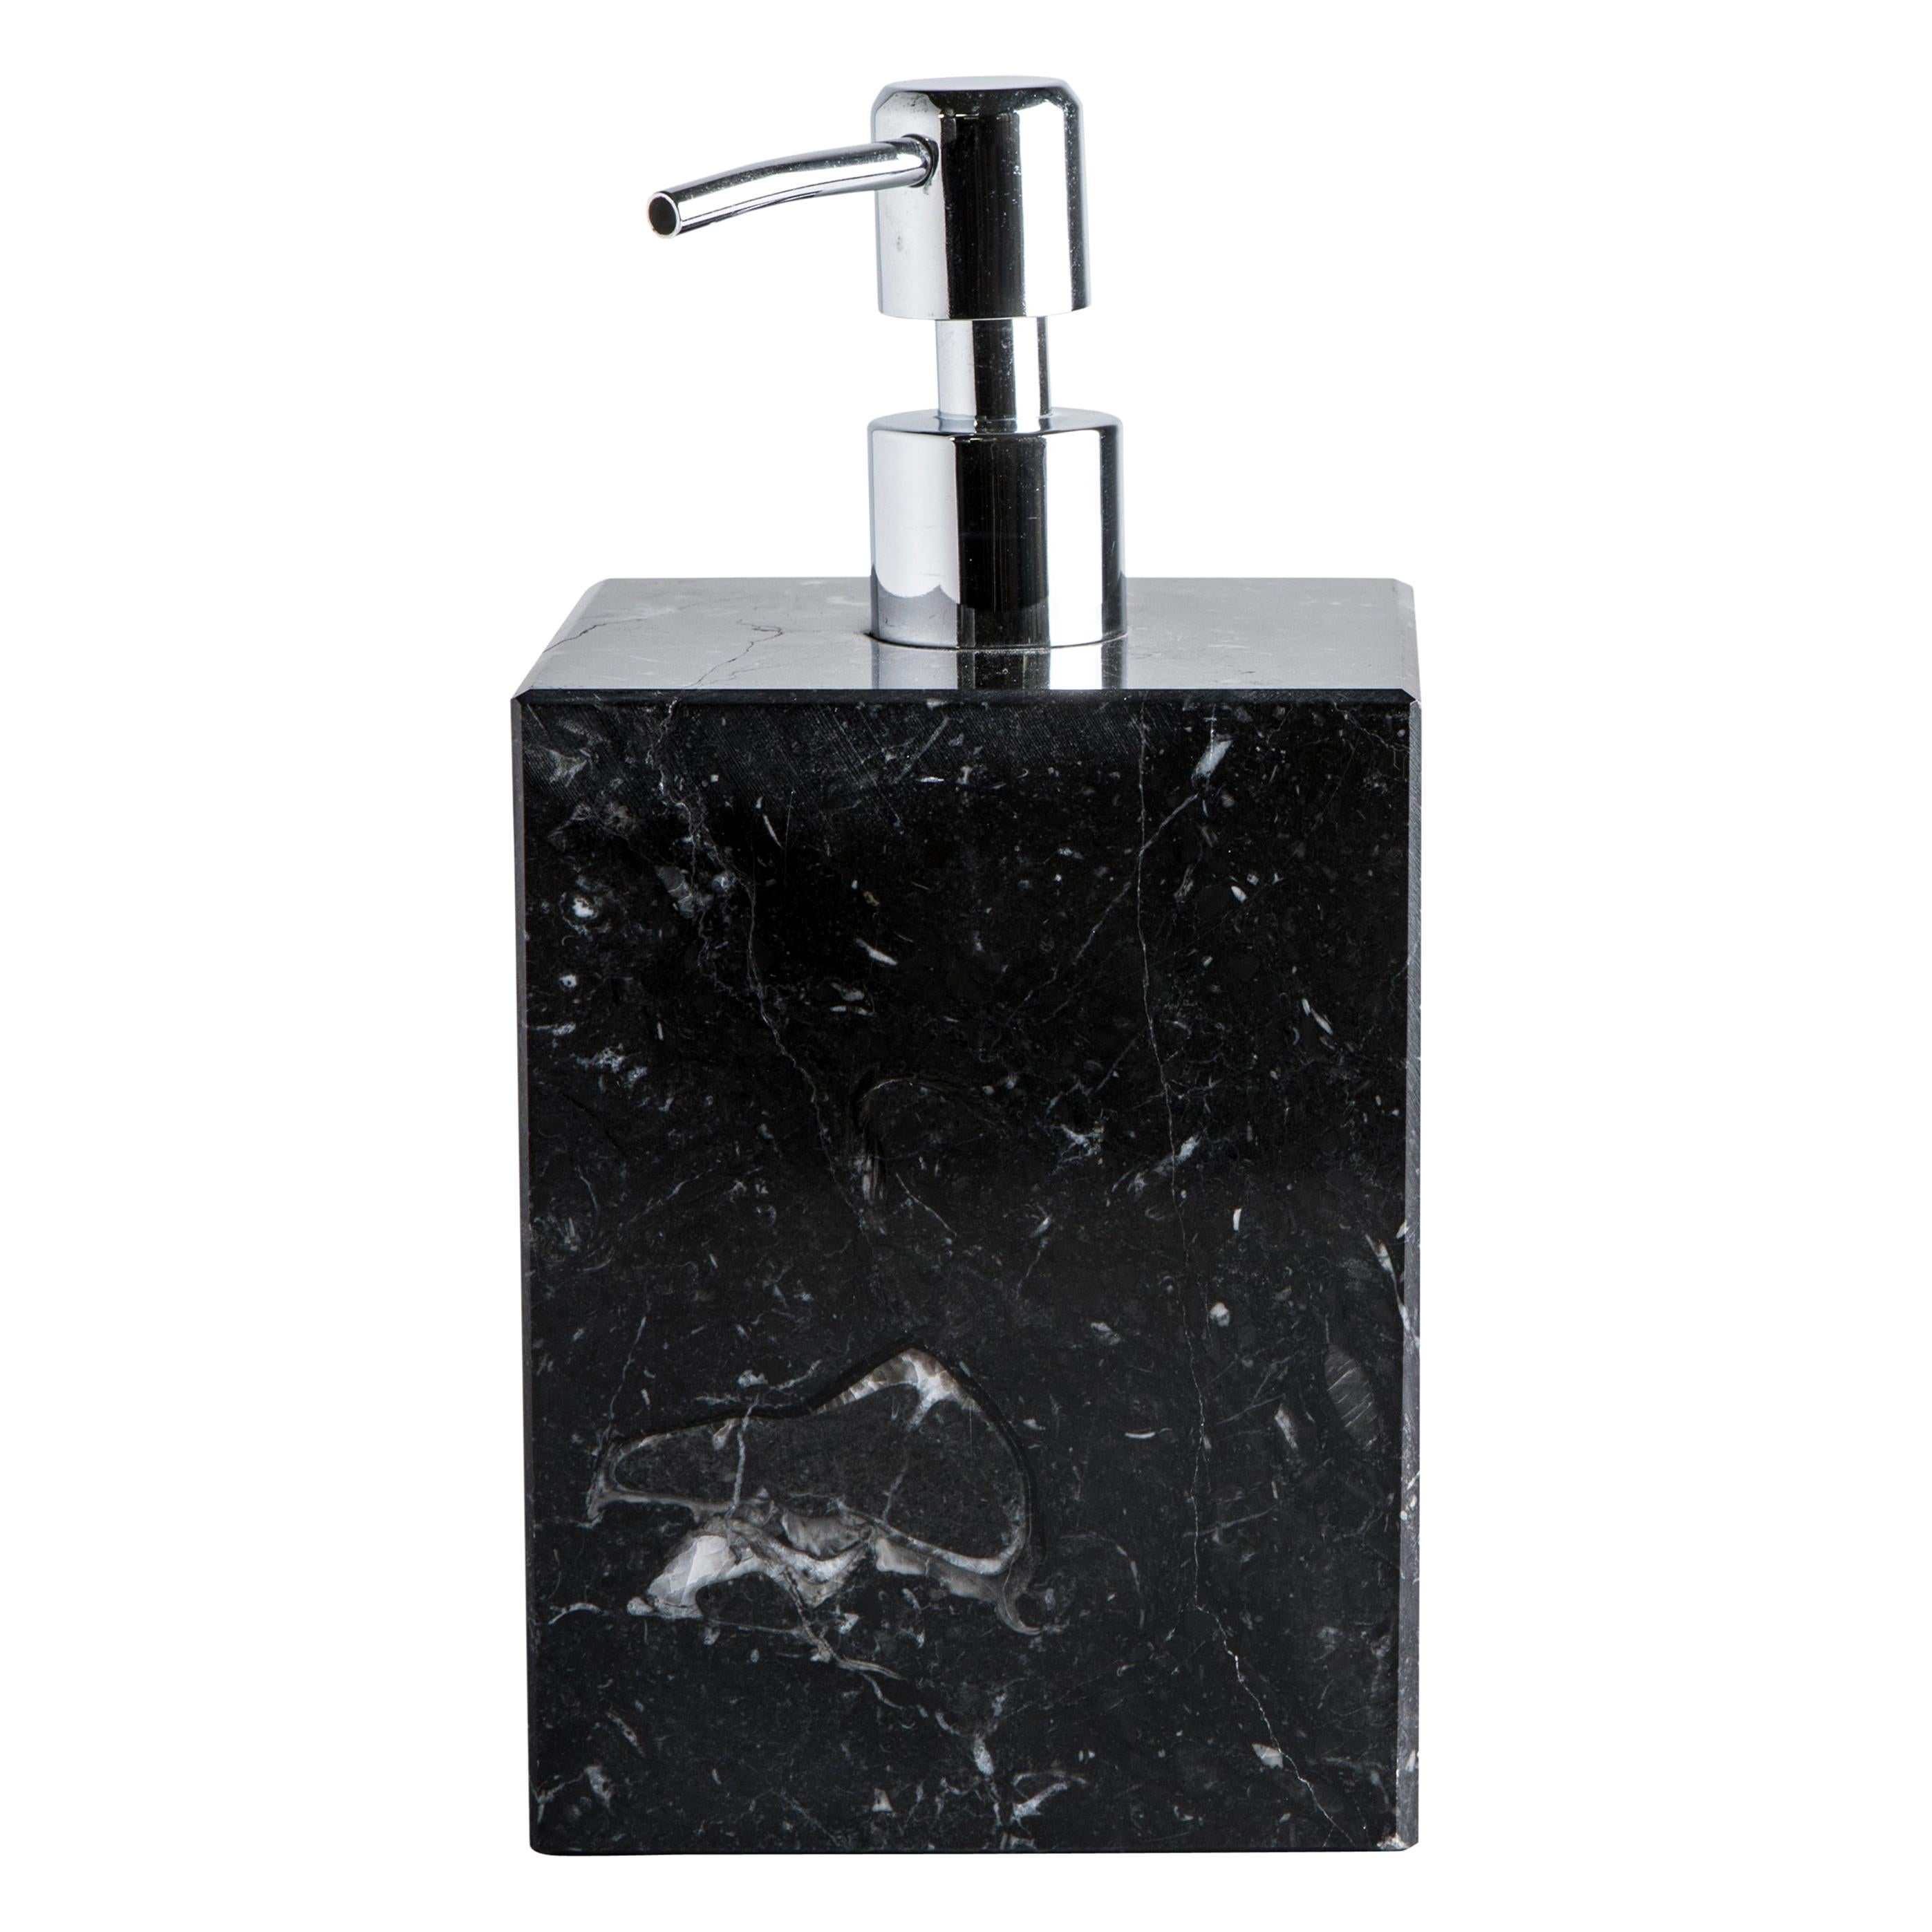 Handmade Squared Soap Dispenser in Black Marquina Marble